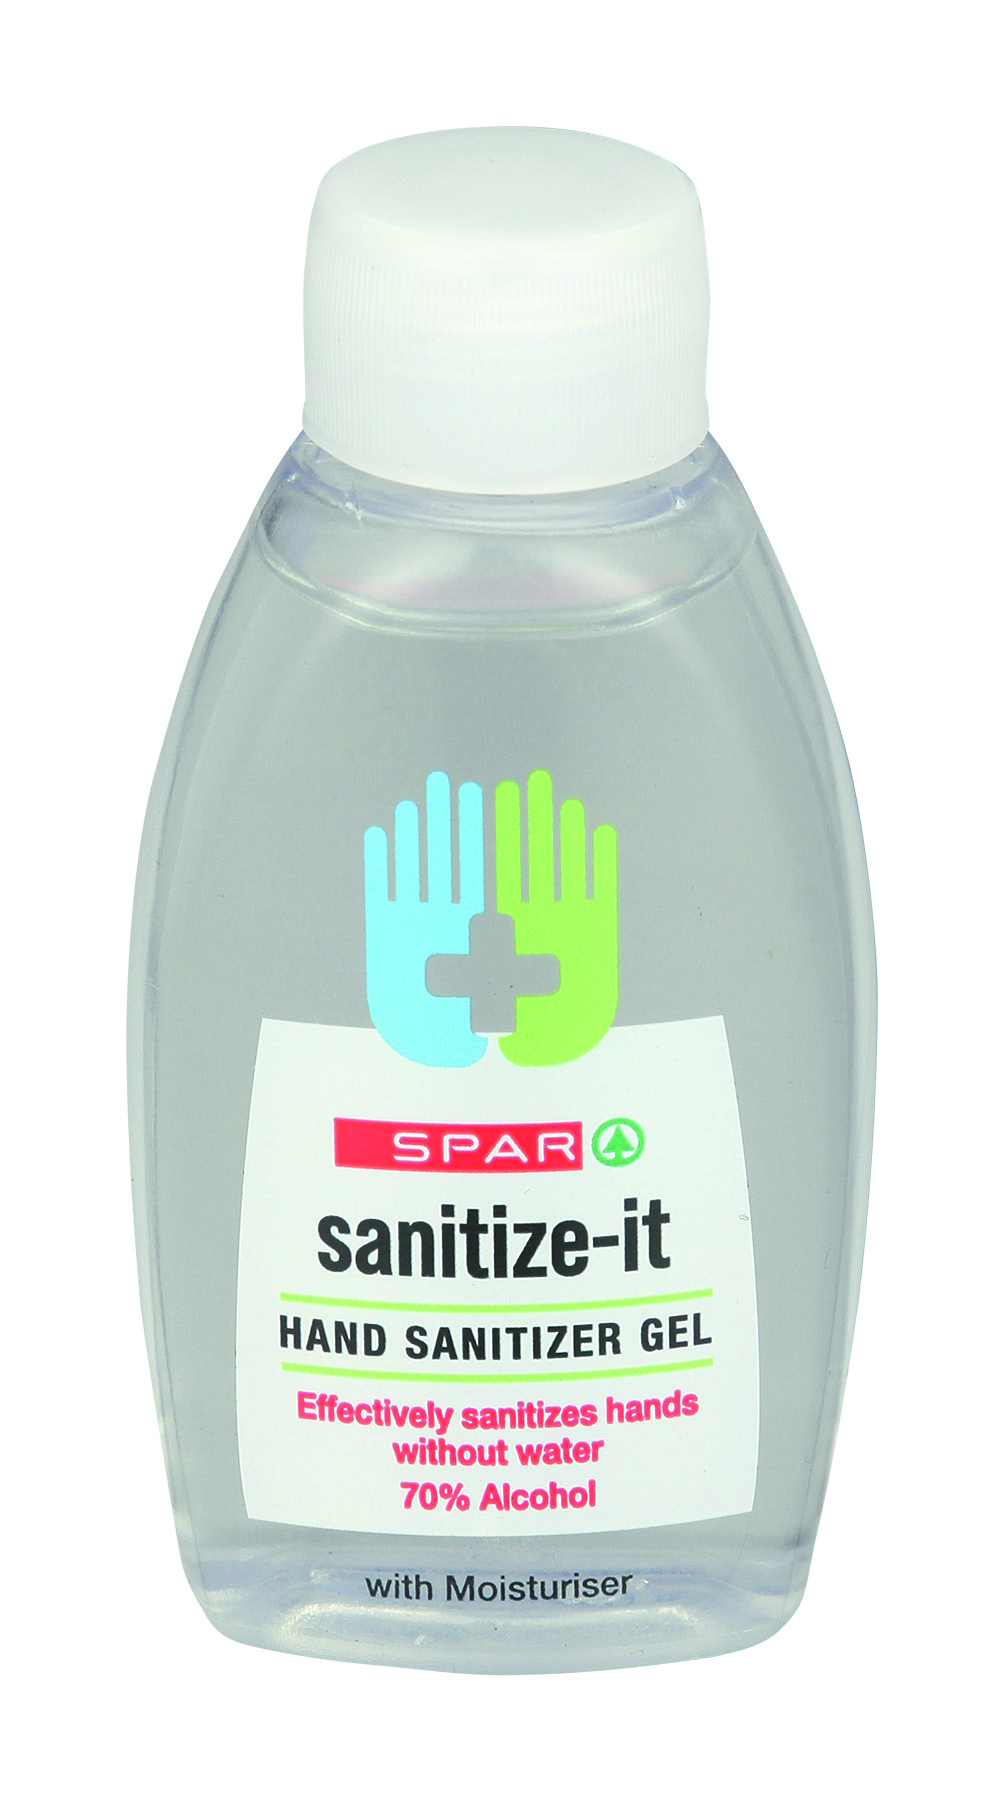 sanitize it hand sanitizer gel